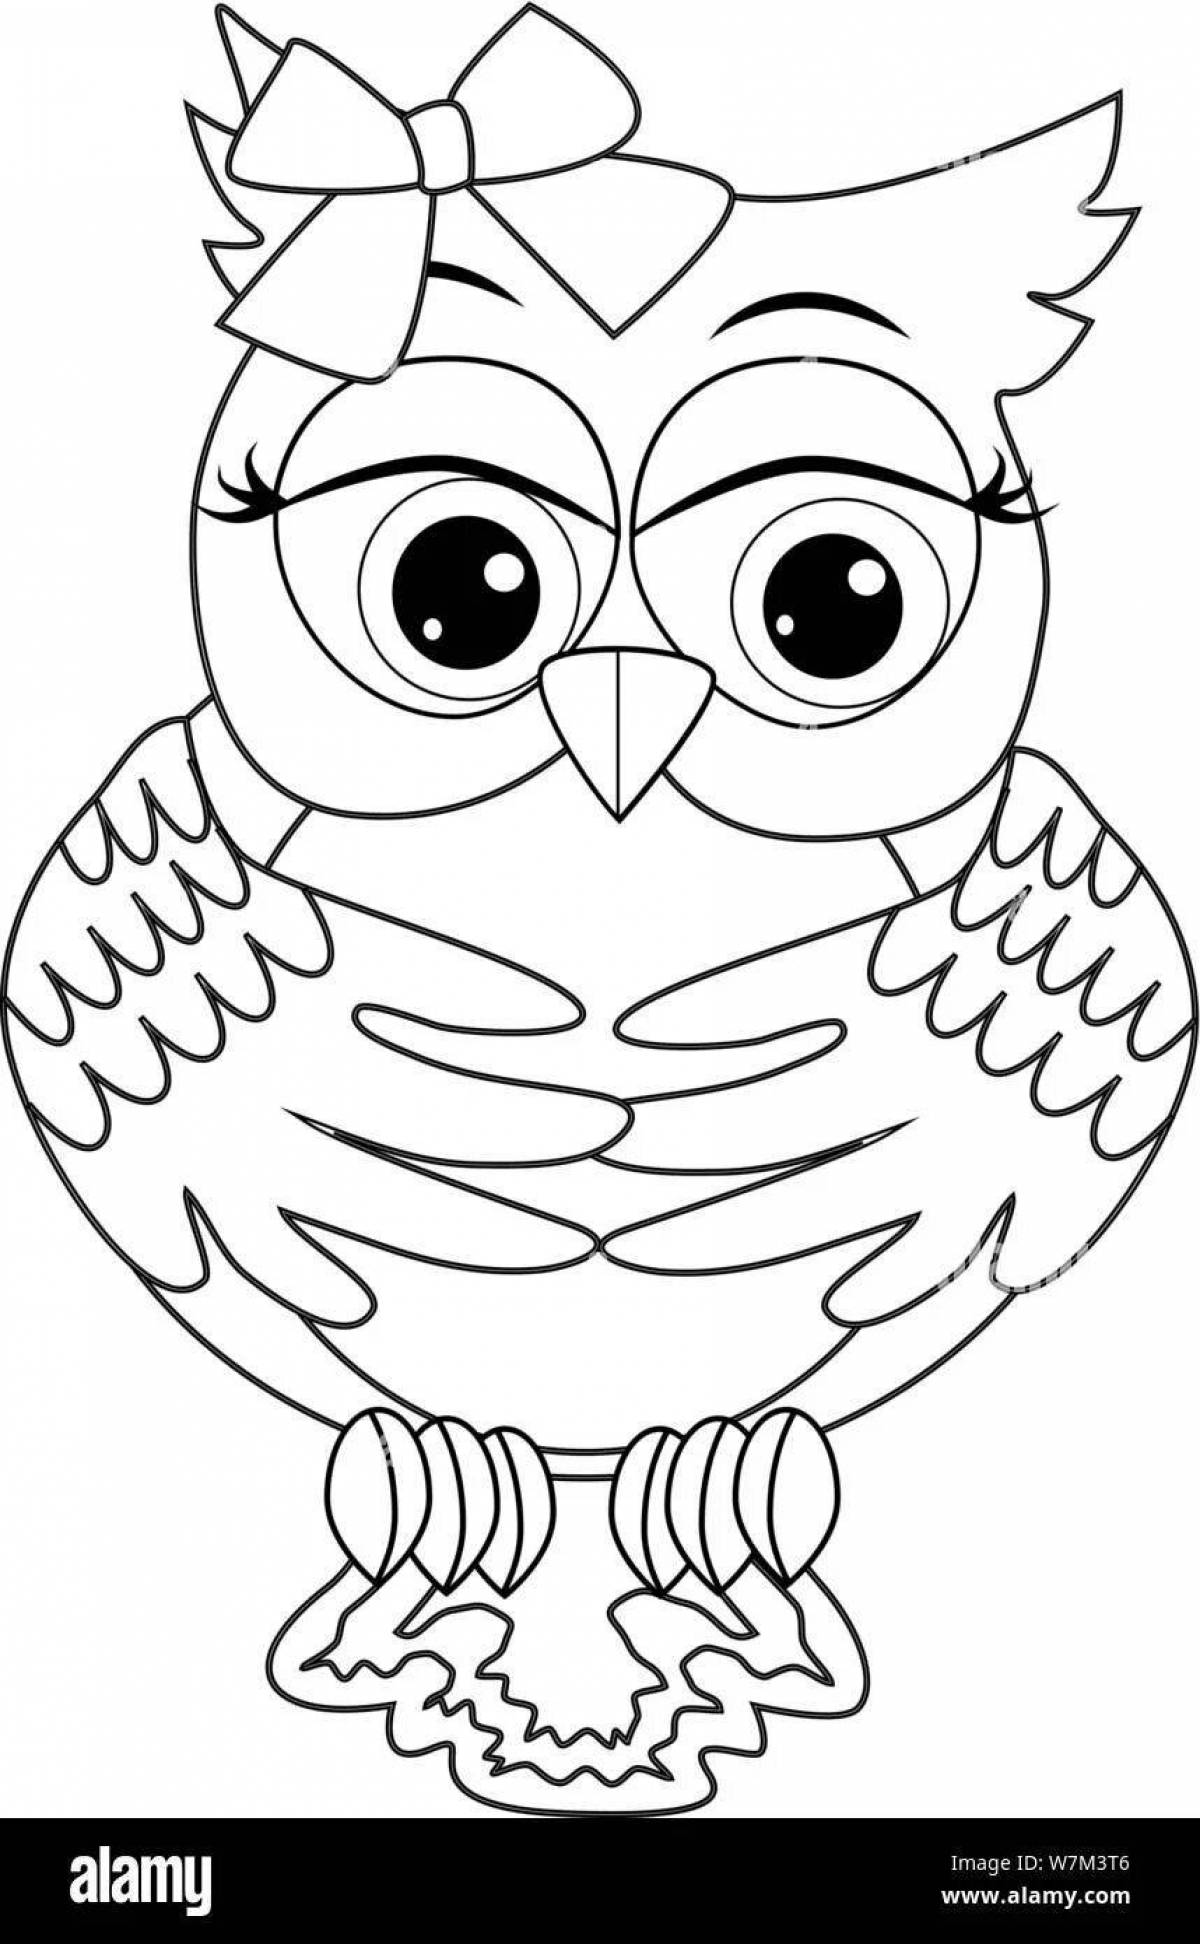 Nice cute owl coloring book